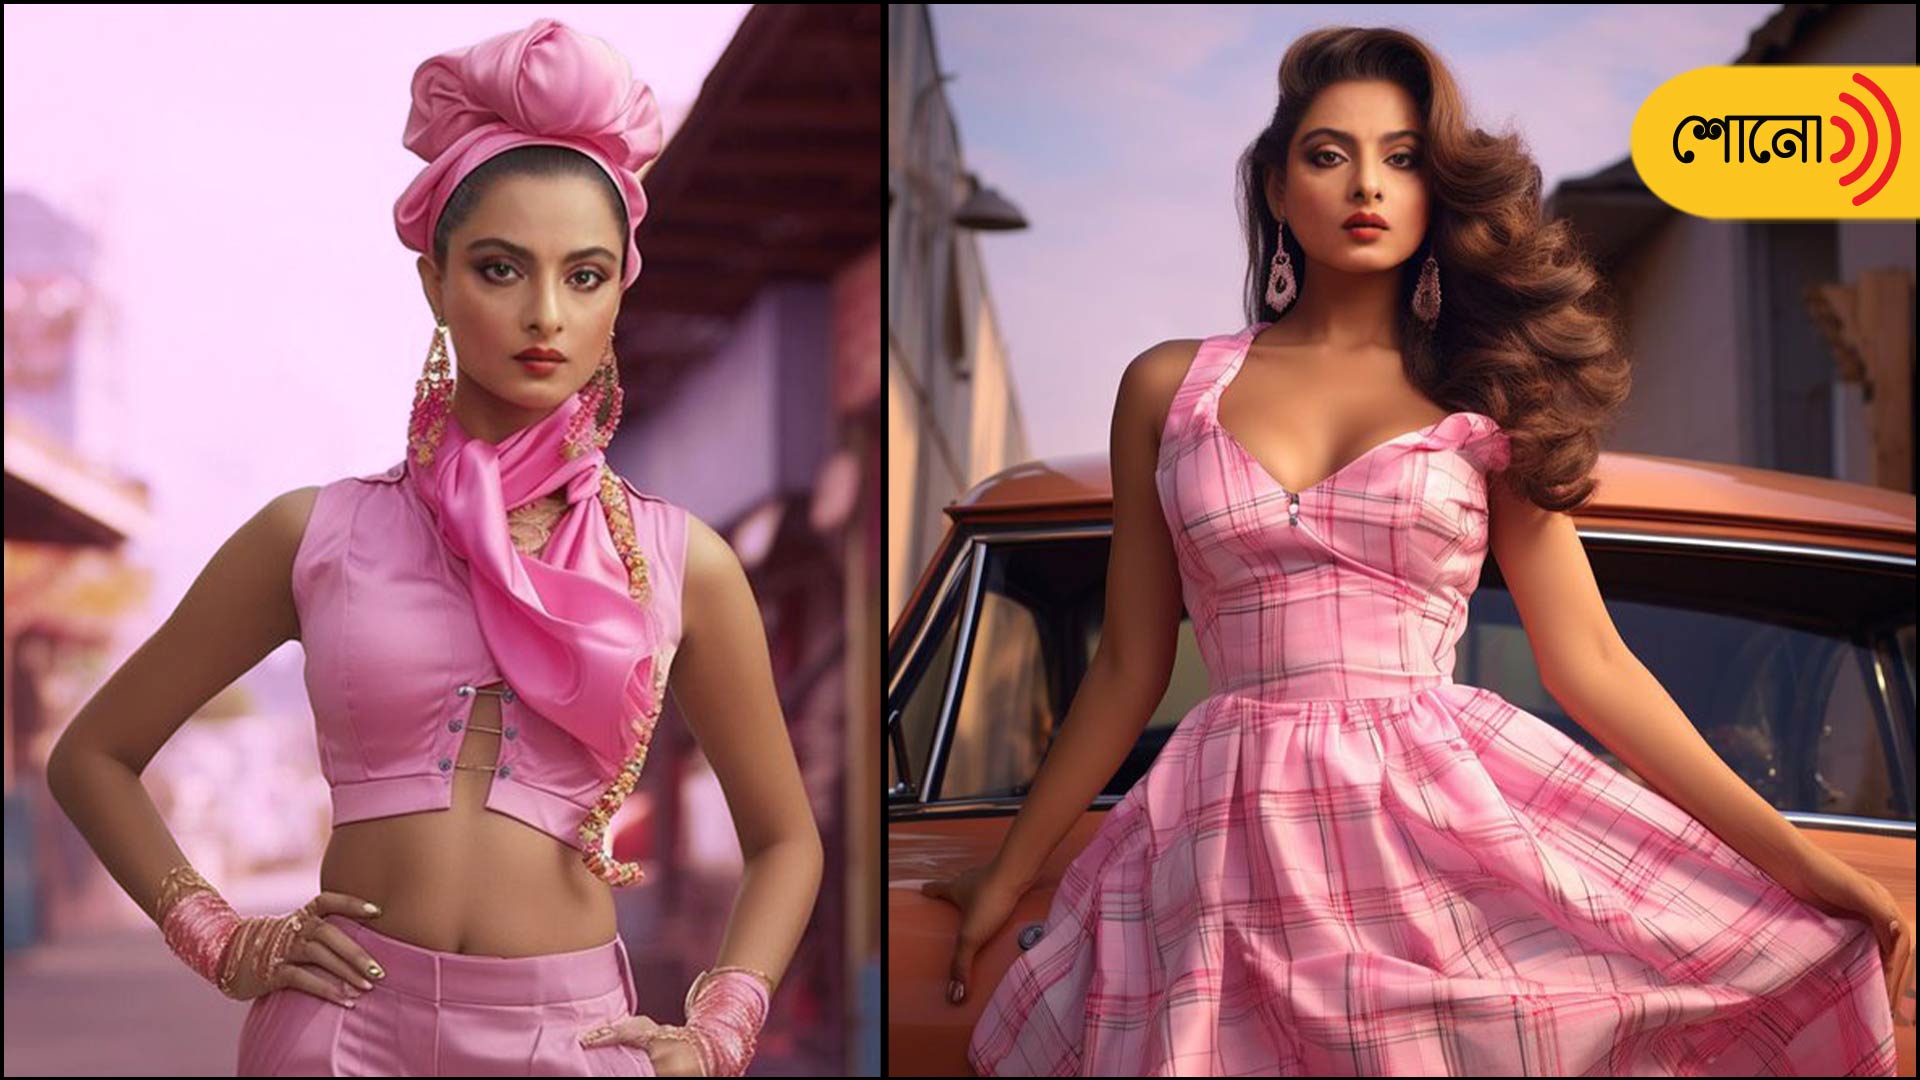 Myntra shares AI images of Rekha as Barbie